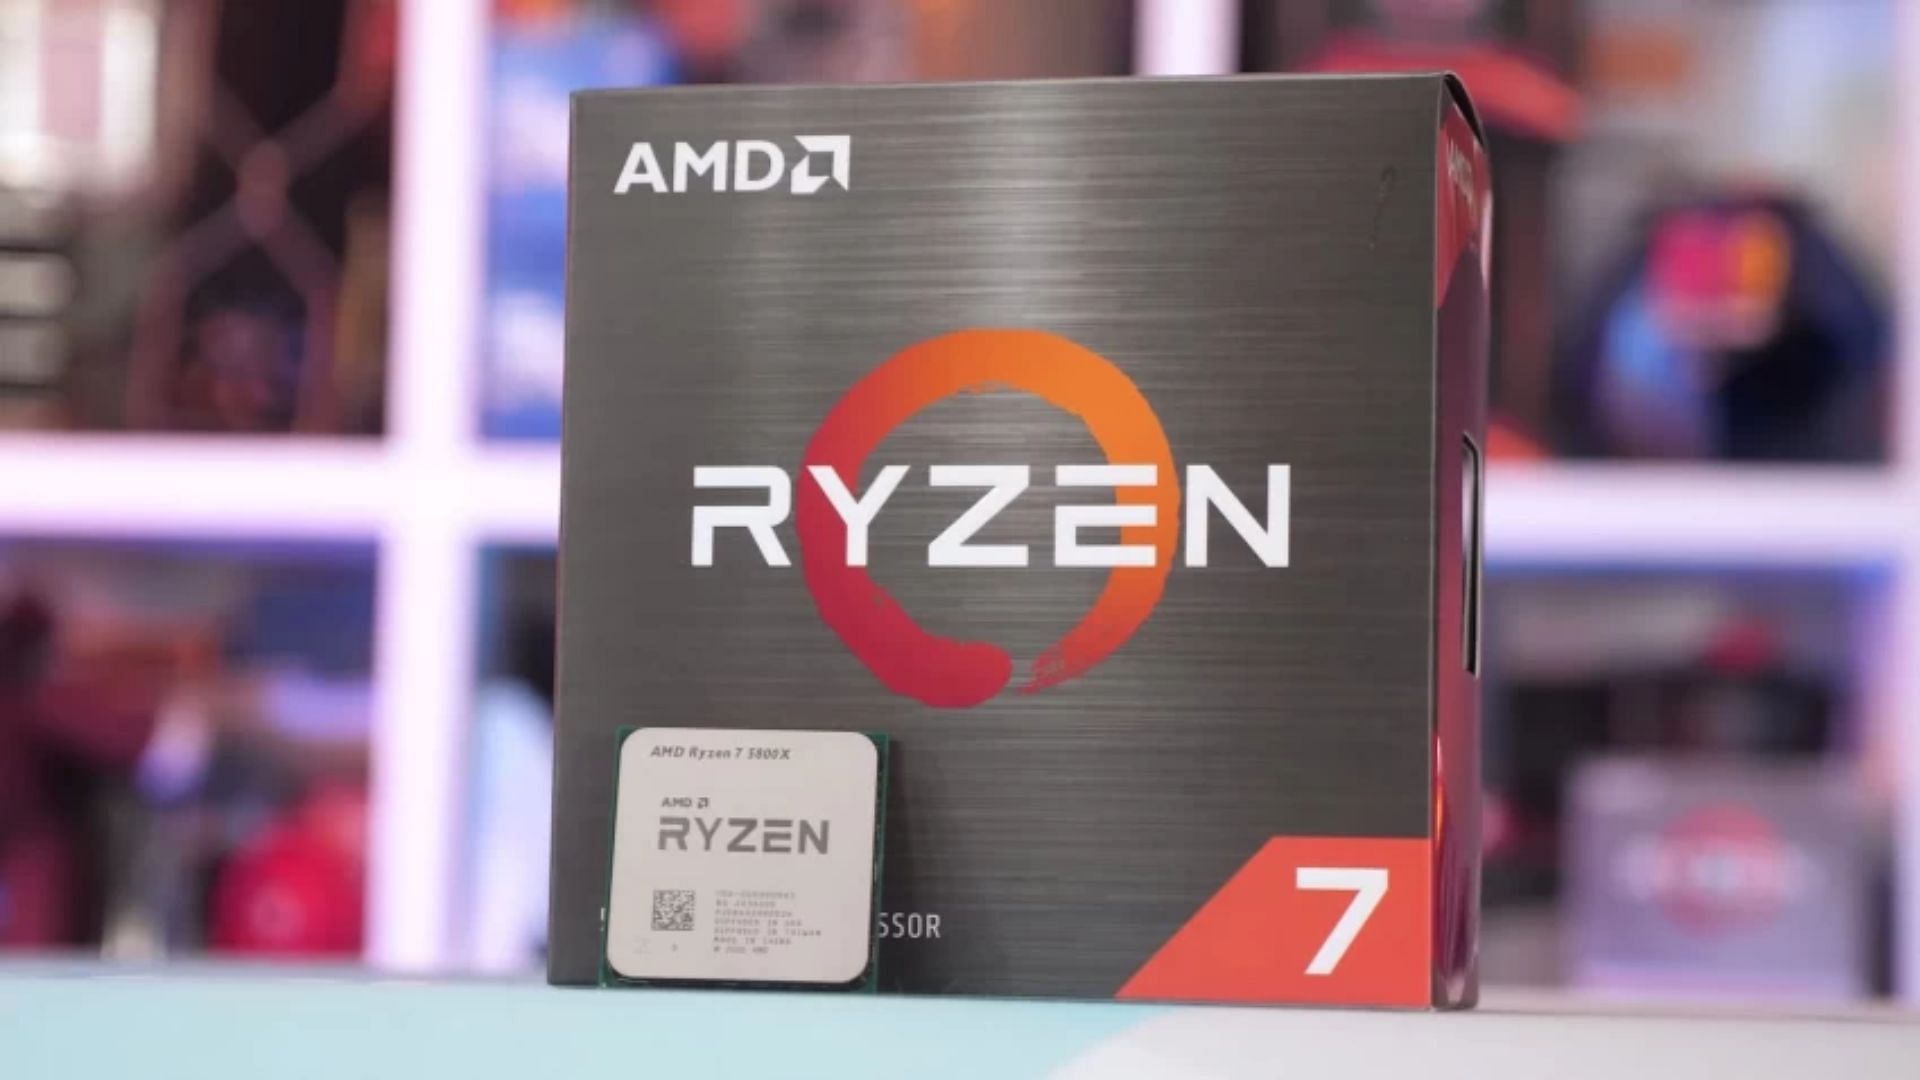 Is AMD Ryzen 7 5800X better than its competitor? (Image via Flipkart/AMD)